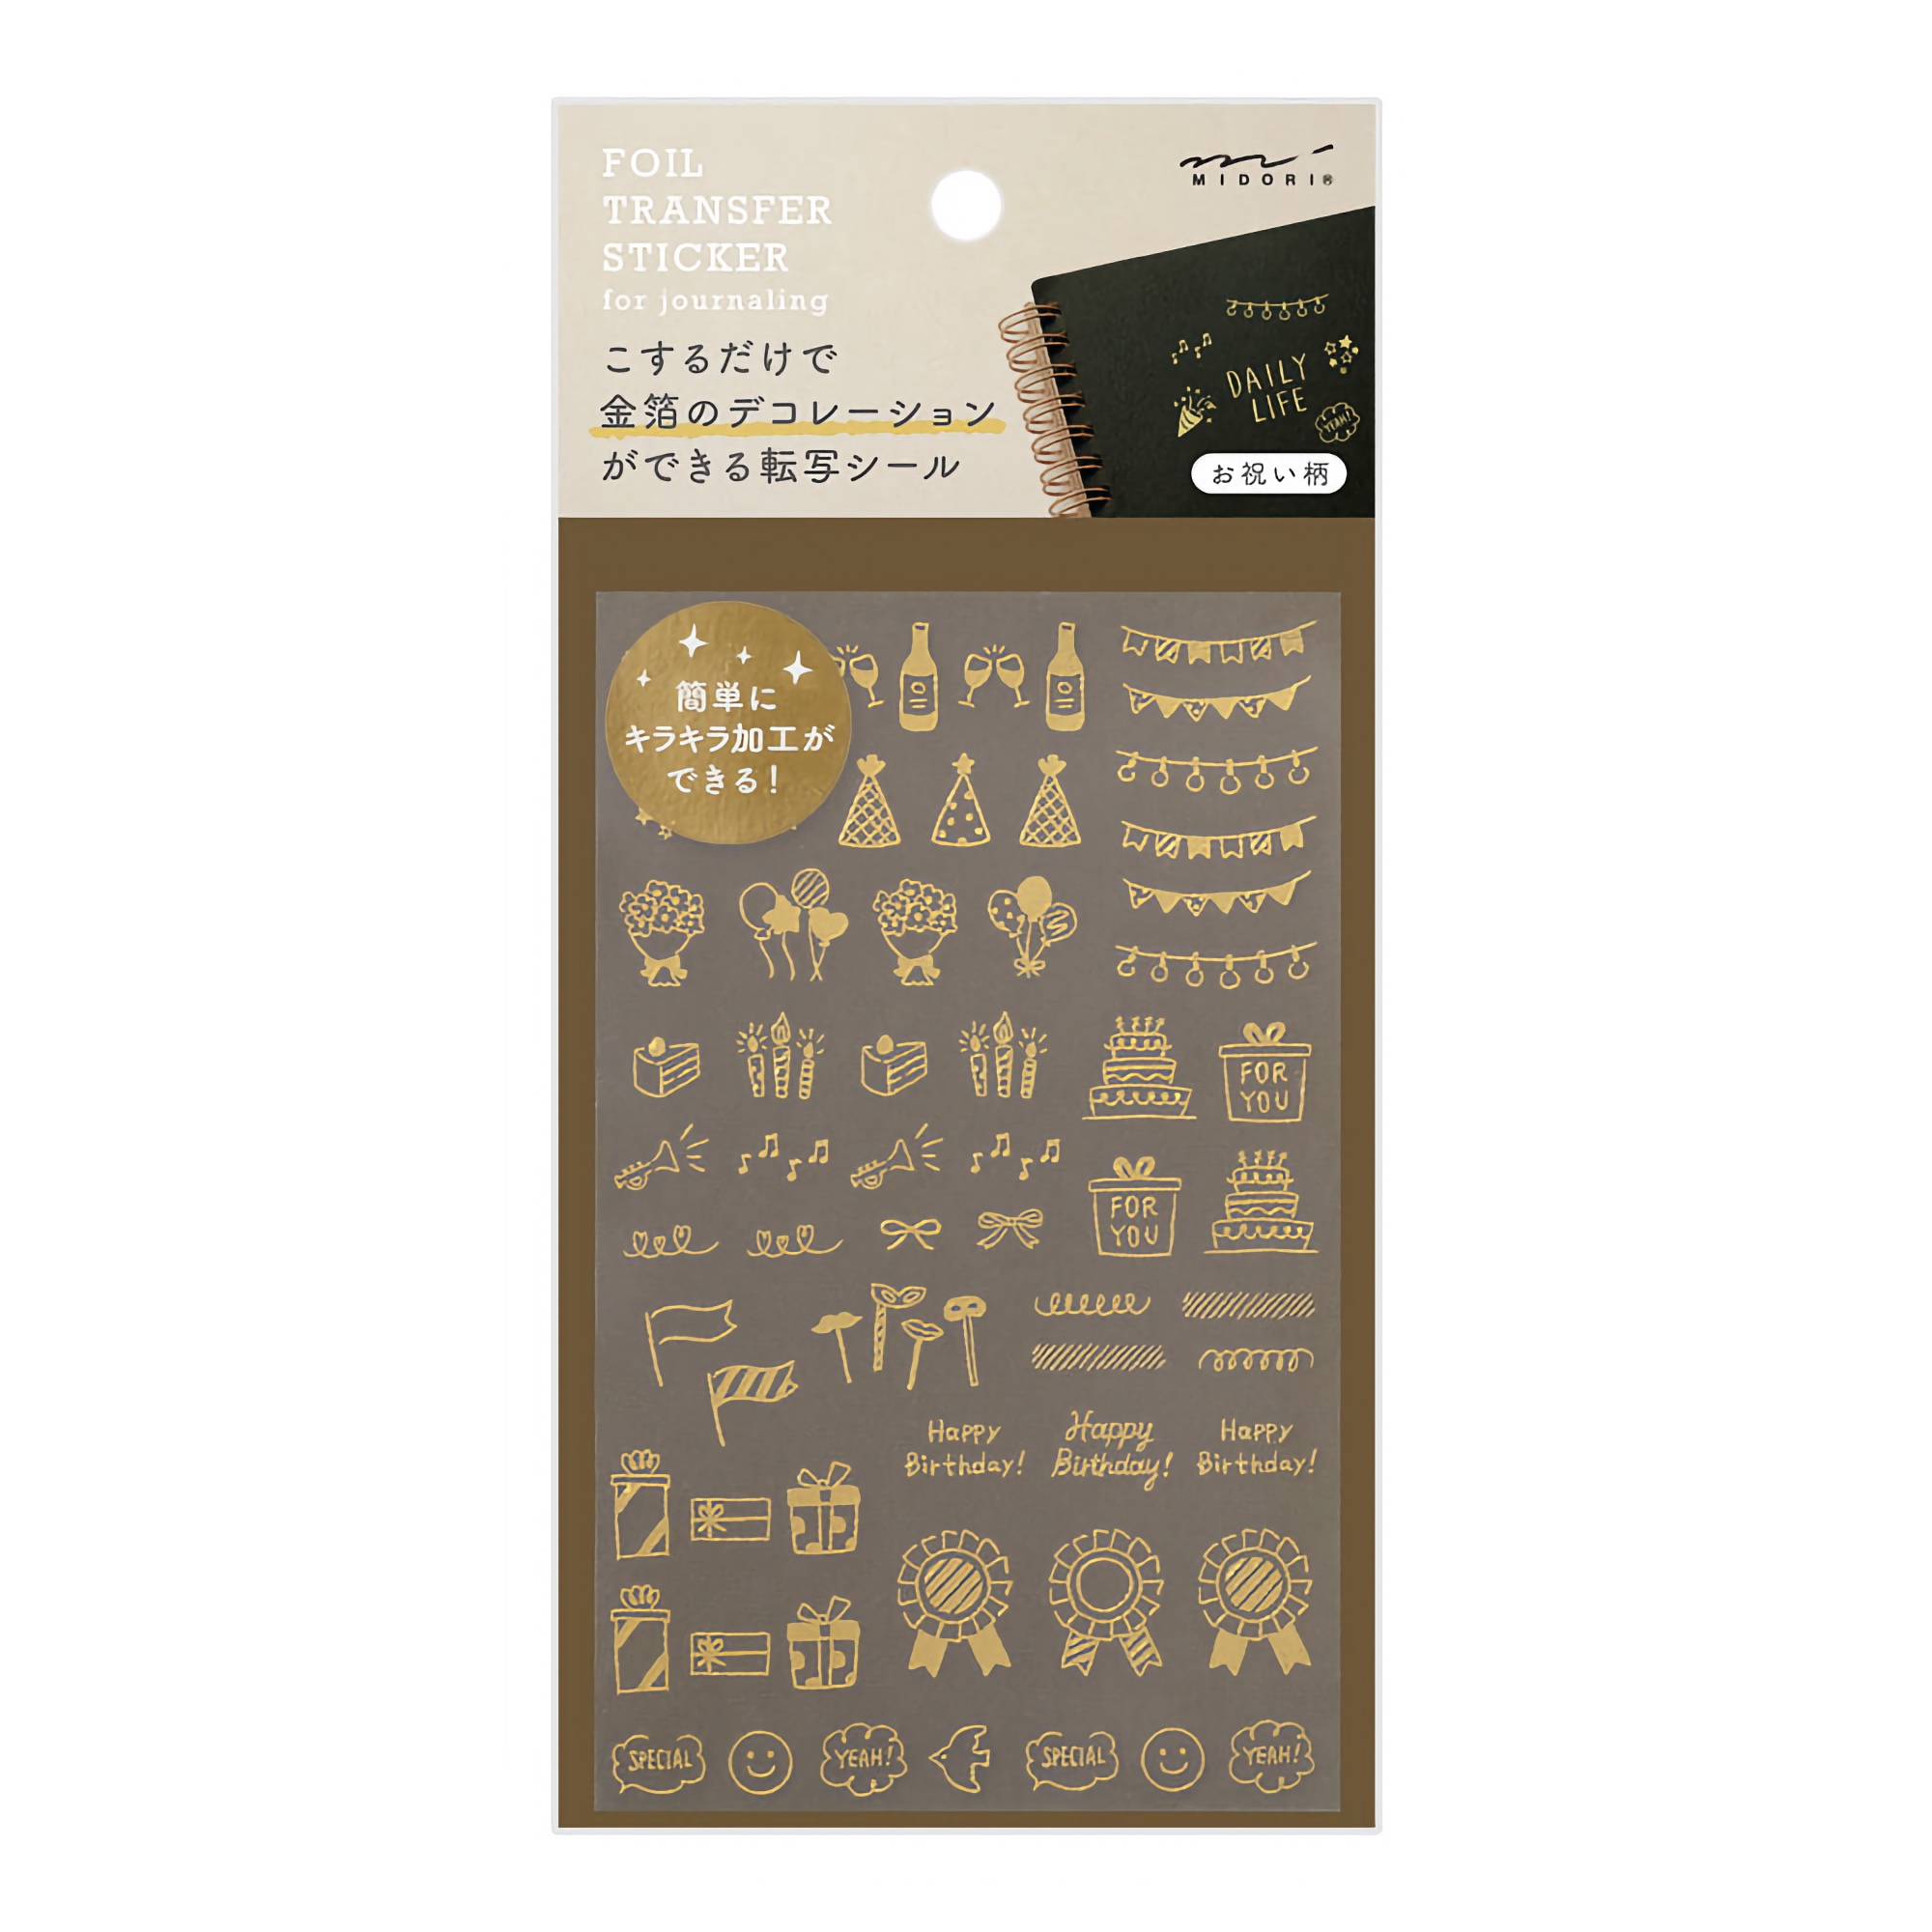 Midori Transfer Sticker Foil Celebratory patterns